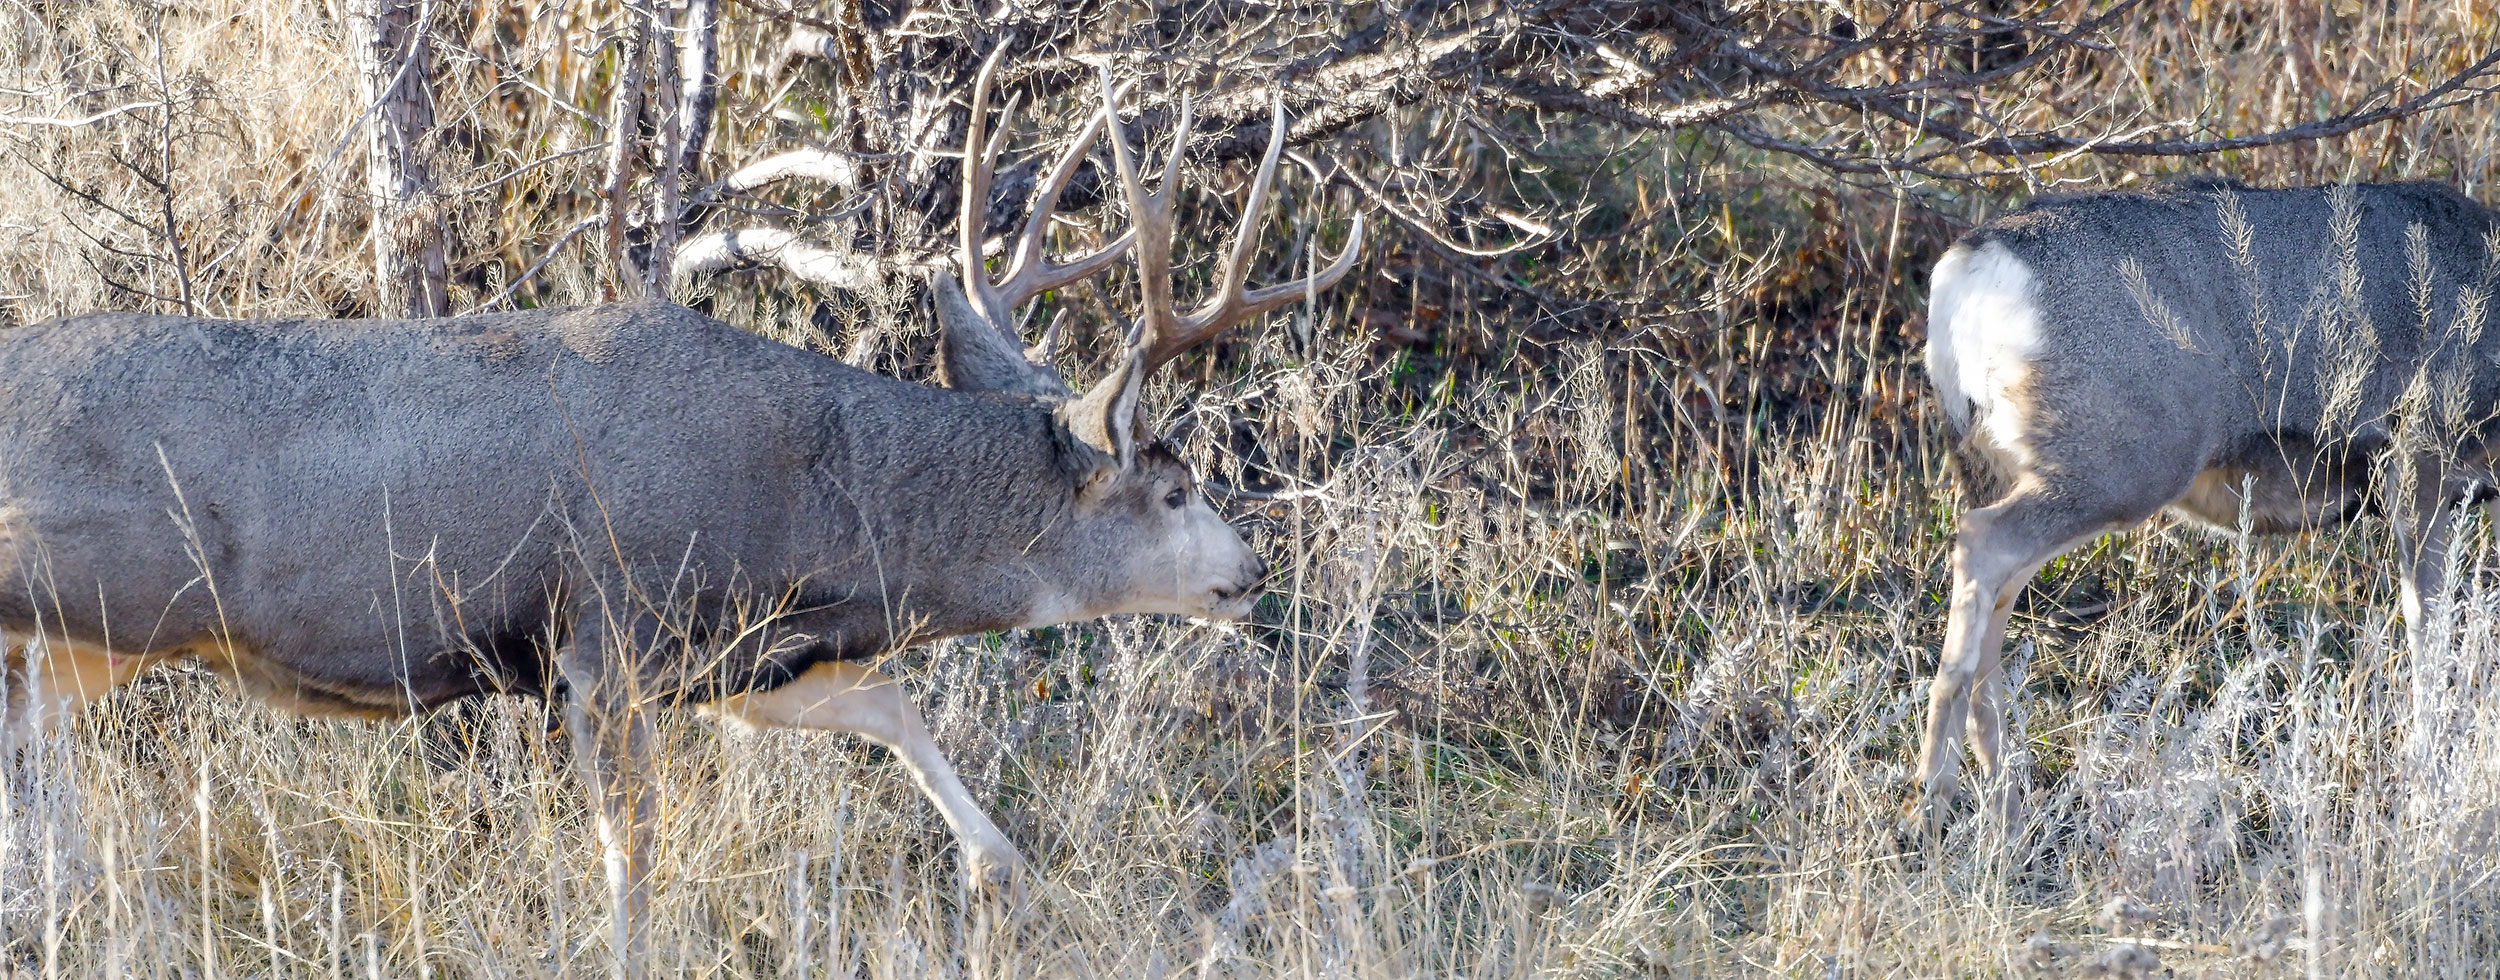 Mule deer buck following a doe during rut